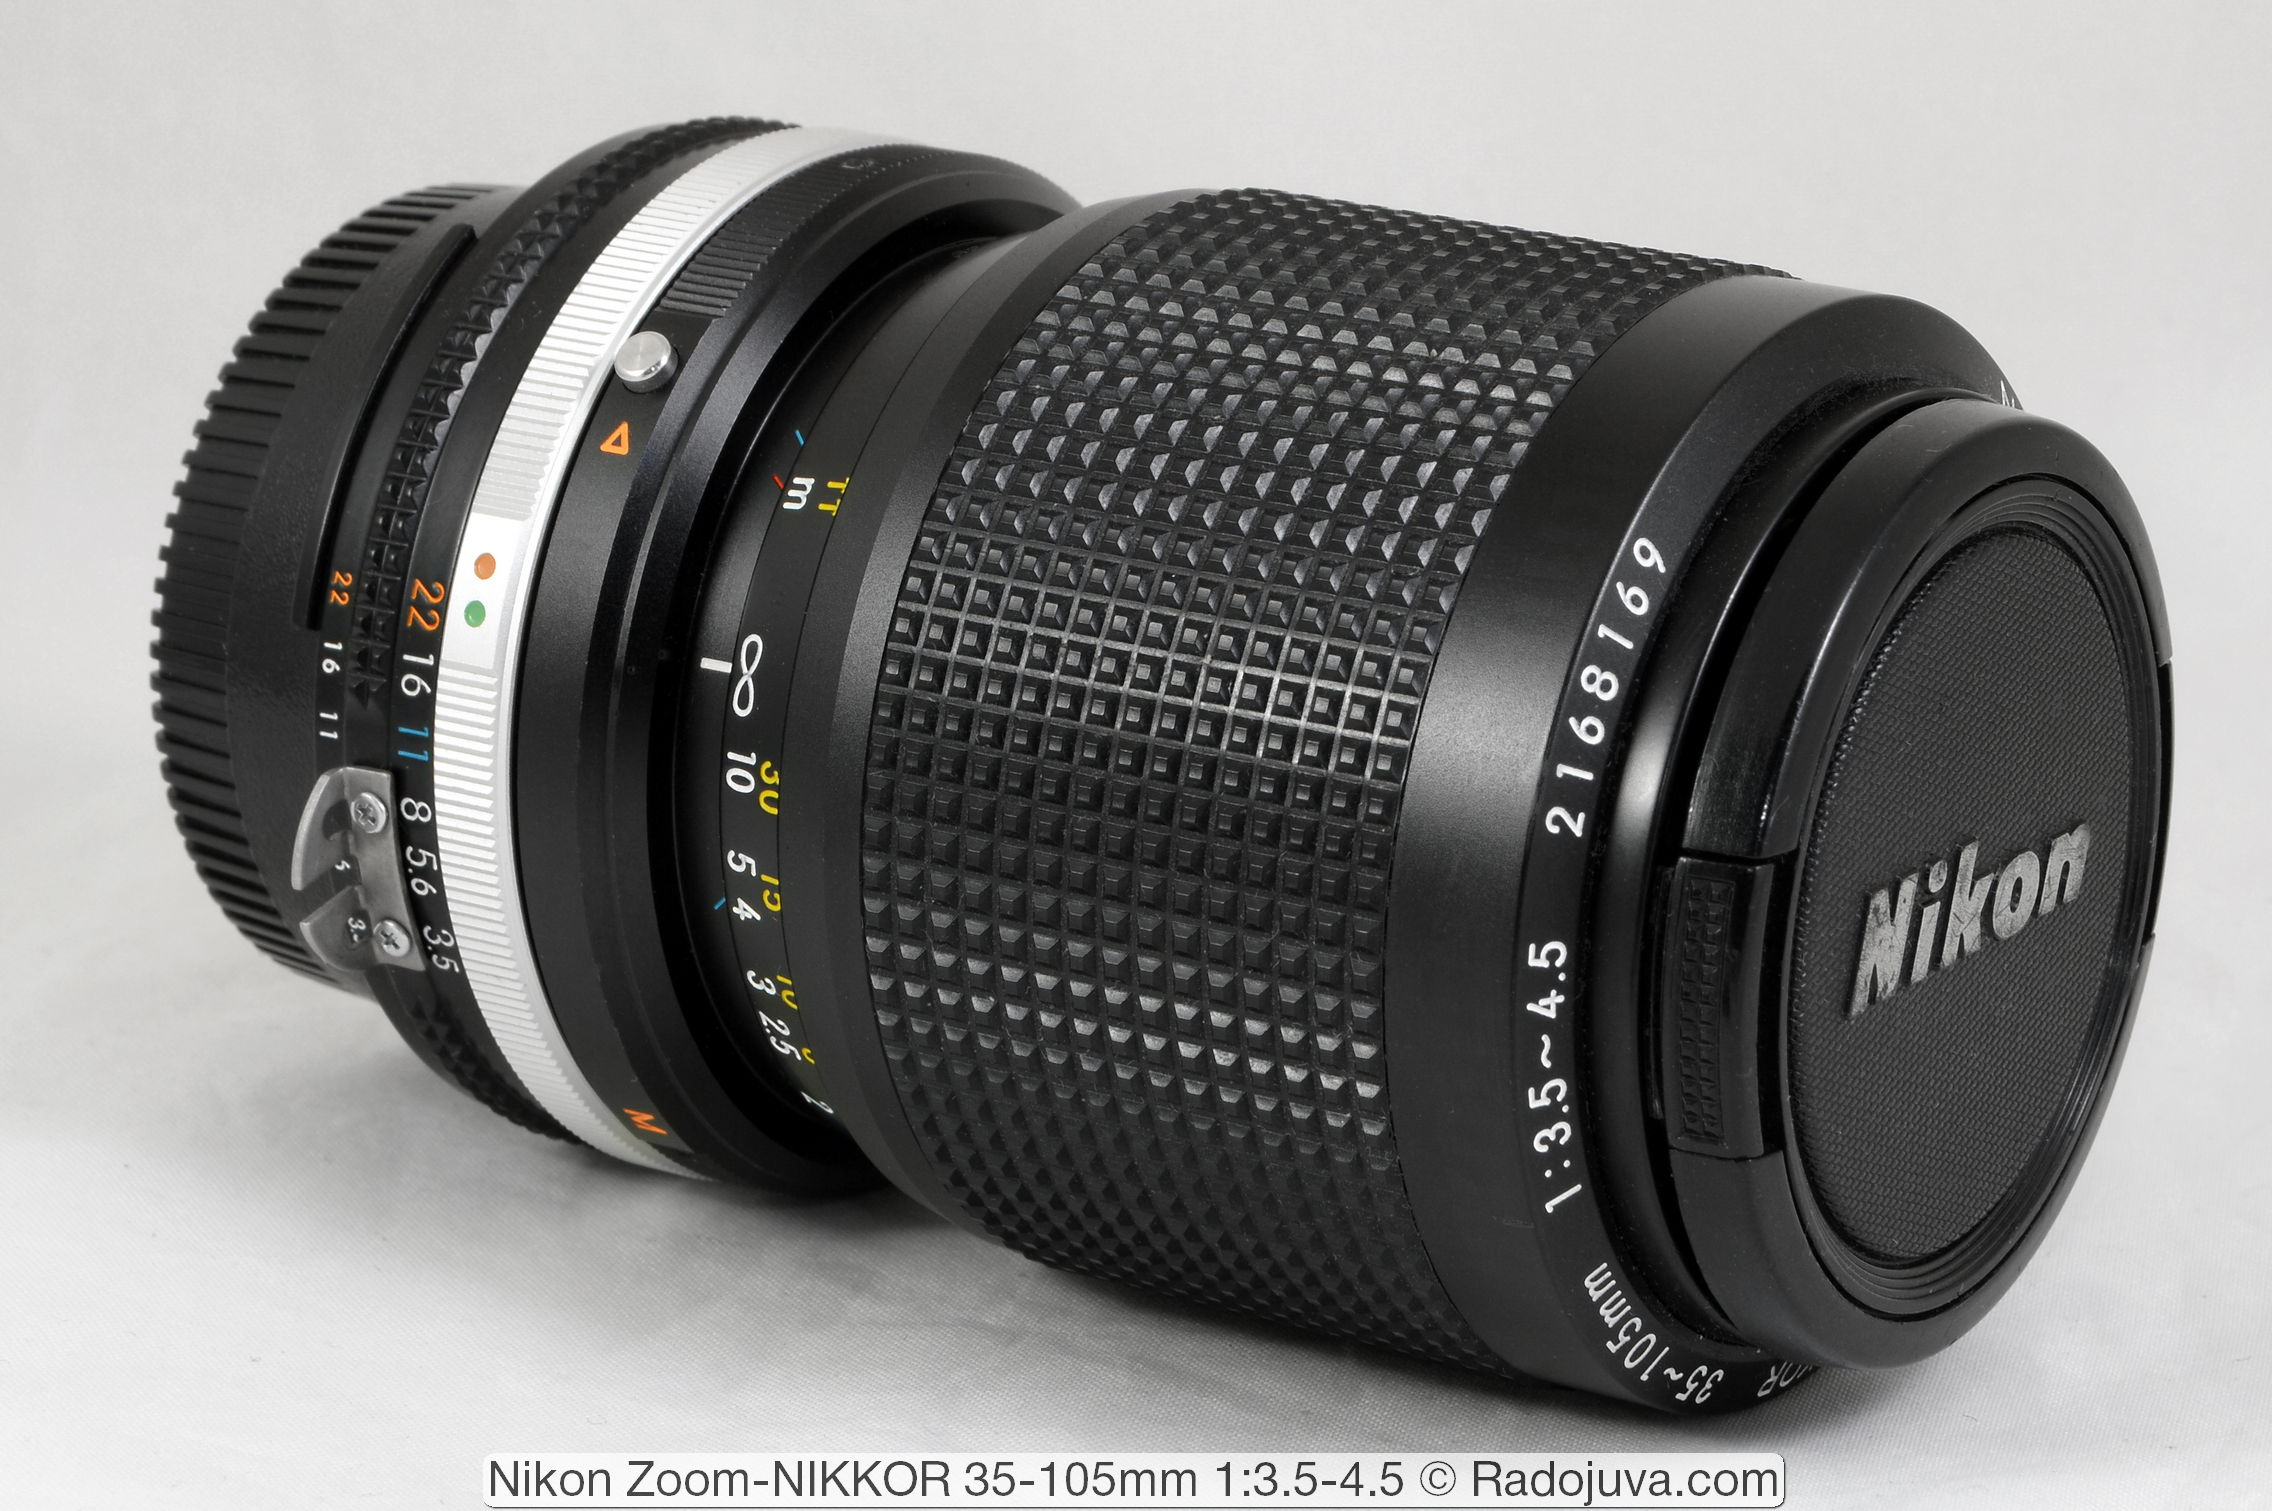 Nikon Zoom-NIKKOR 35-105mm 1:3.5-4.5 AI-S